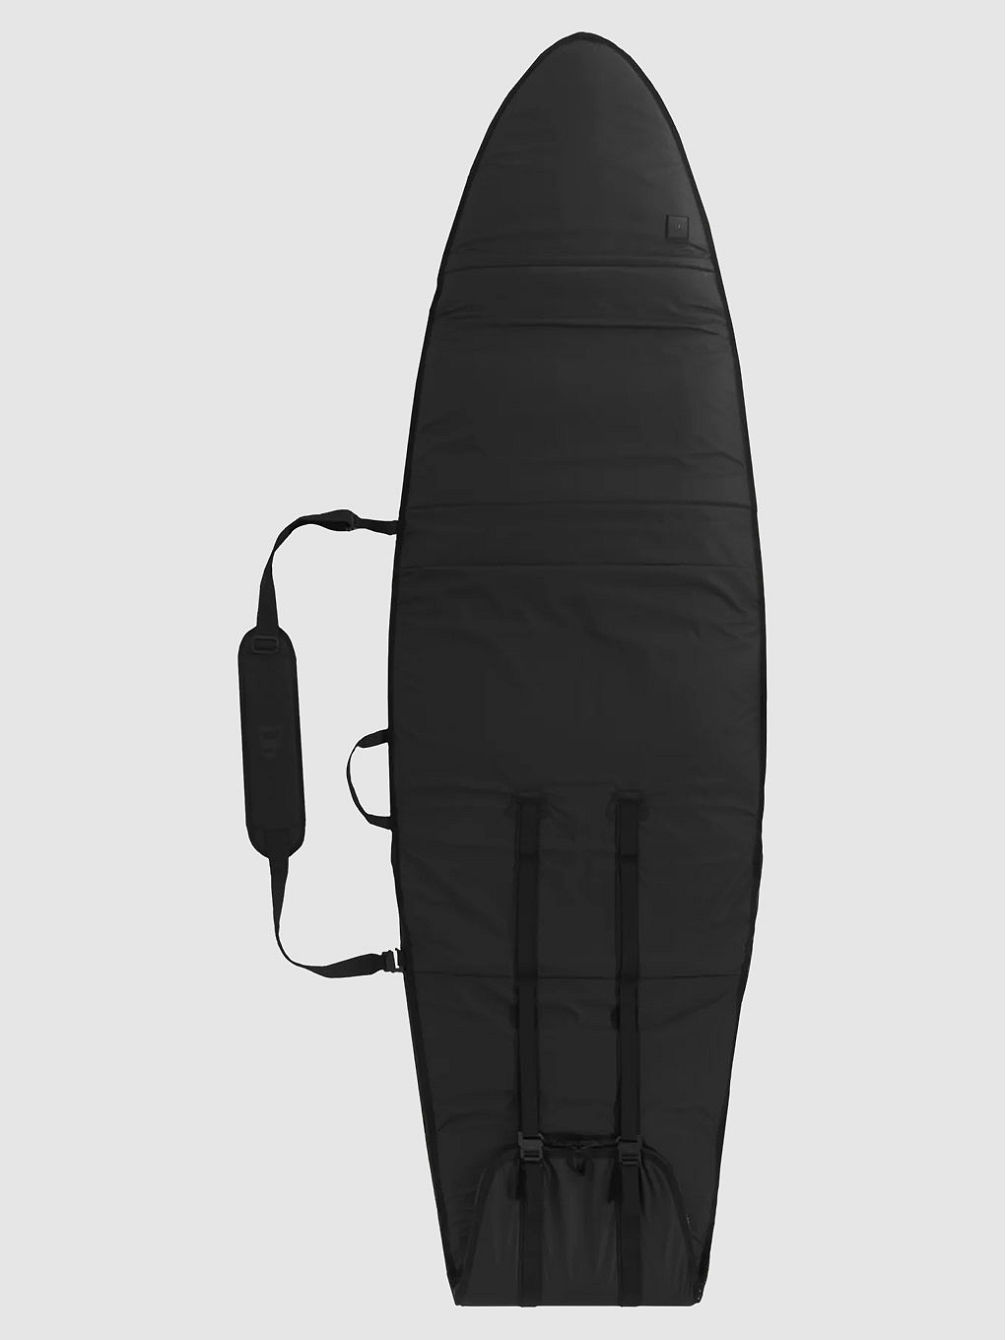 Single Board Mid-Length Boardbag Surf